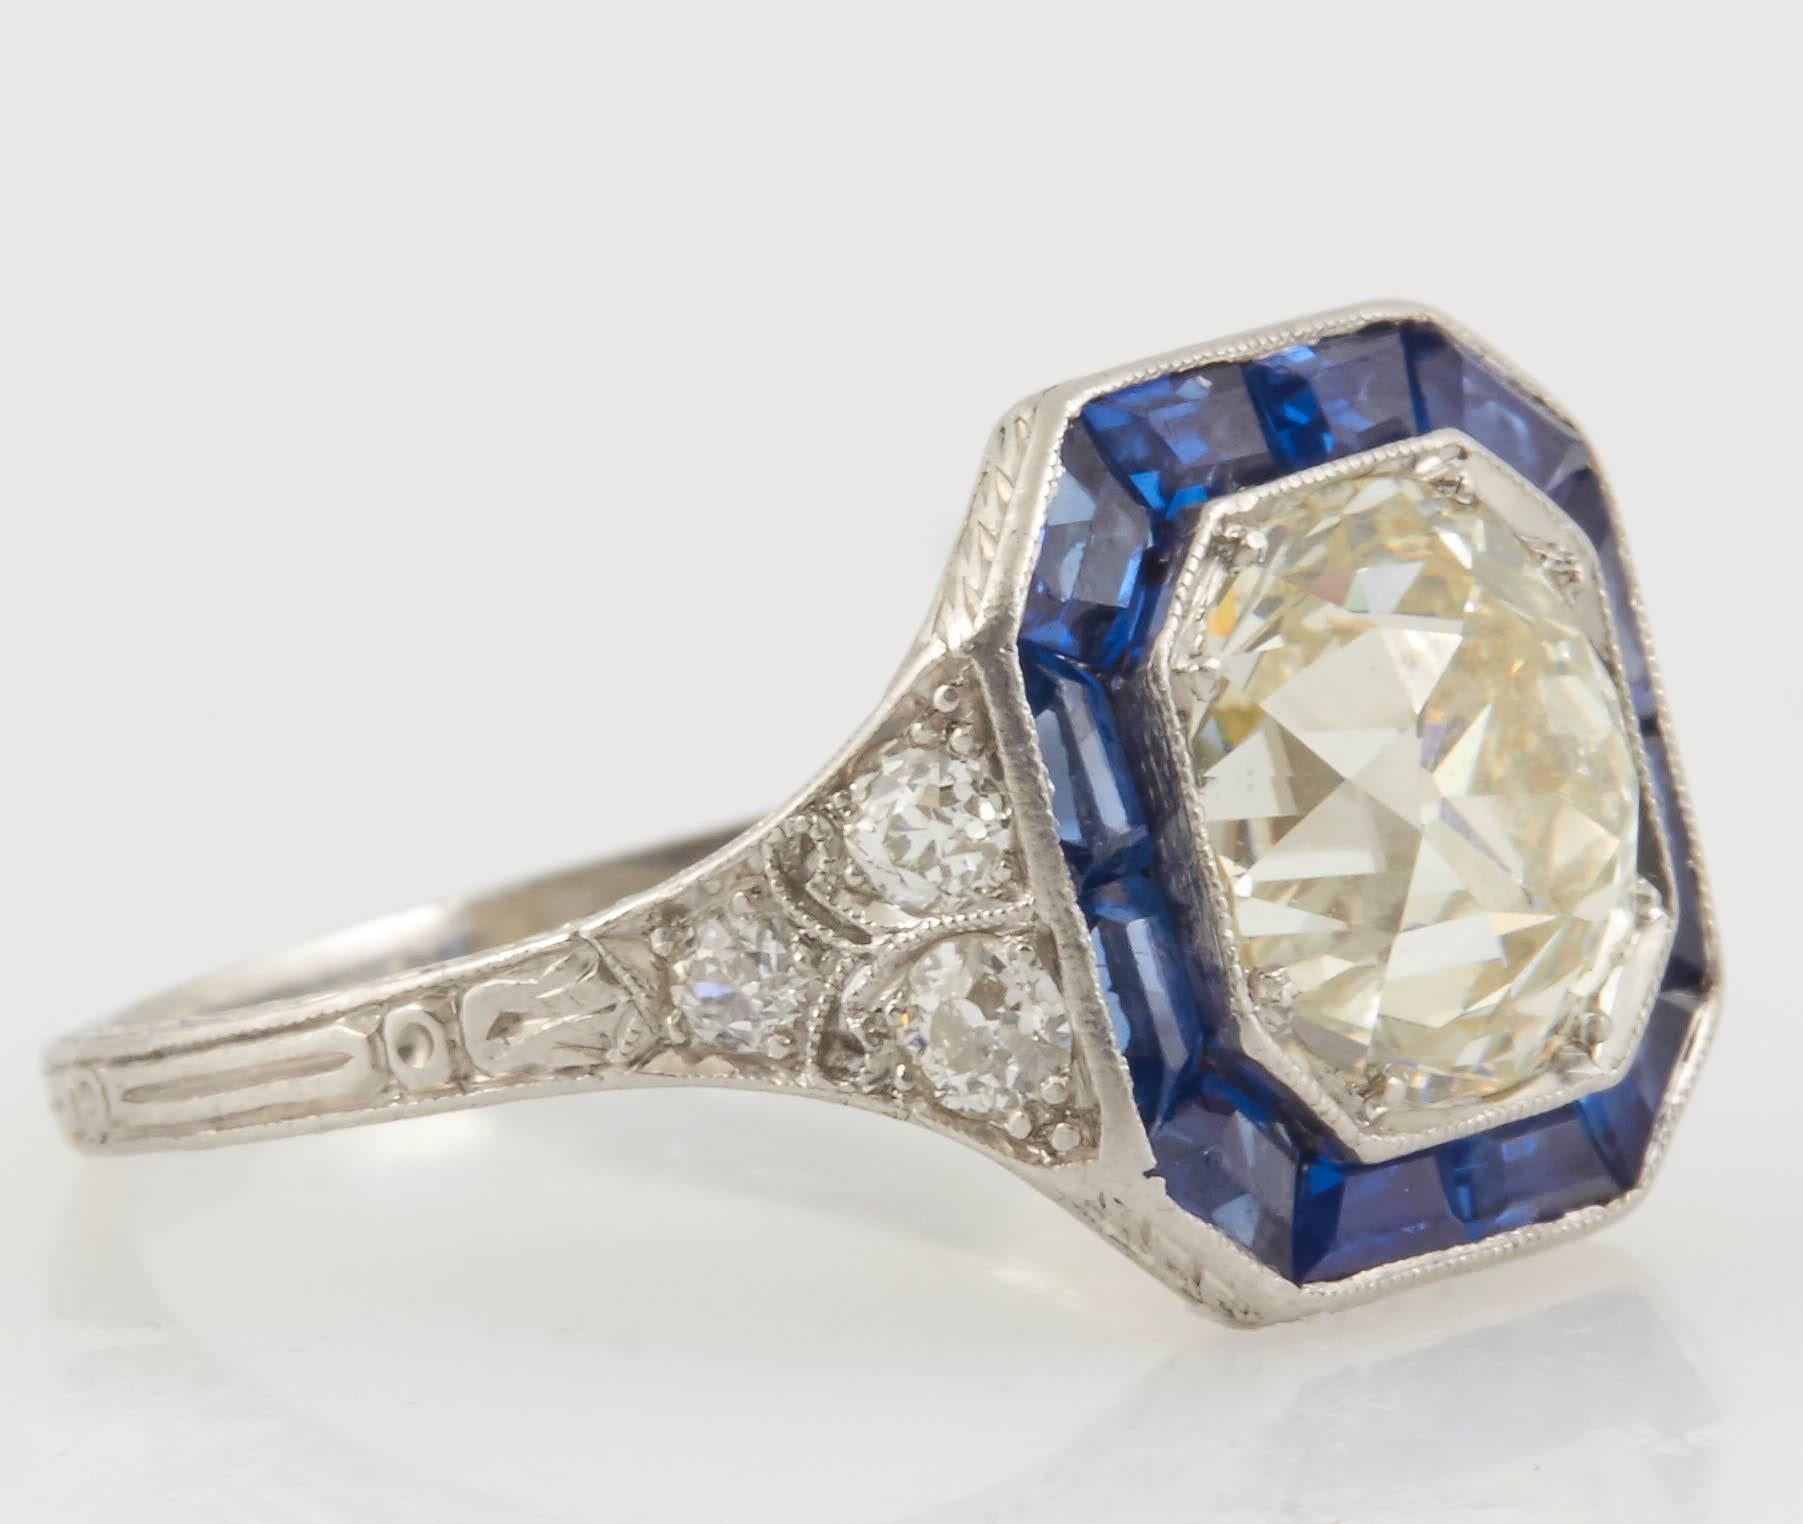 Original Art Deco Engagement Ring featuring an Old European Cut diamond weighing 3.25 carats.